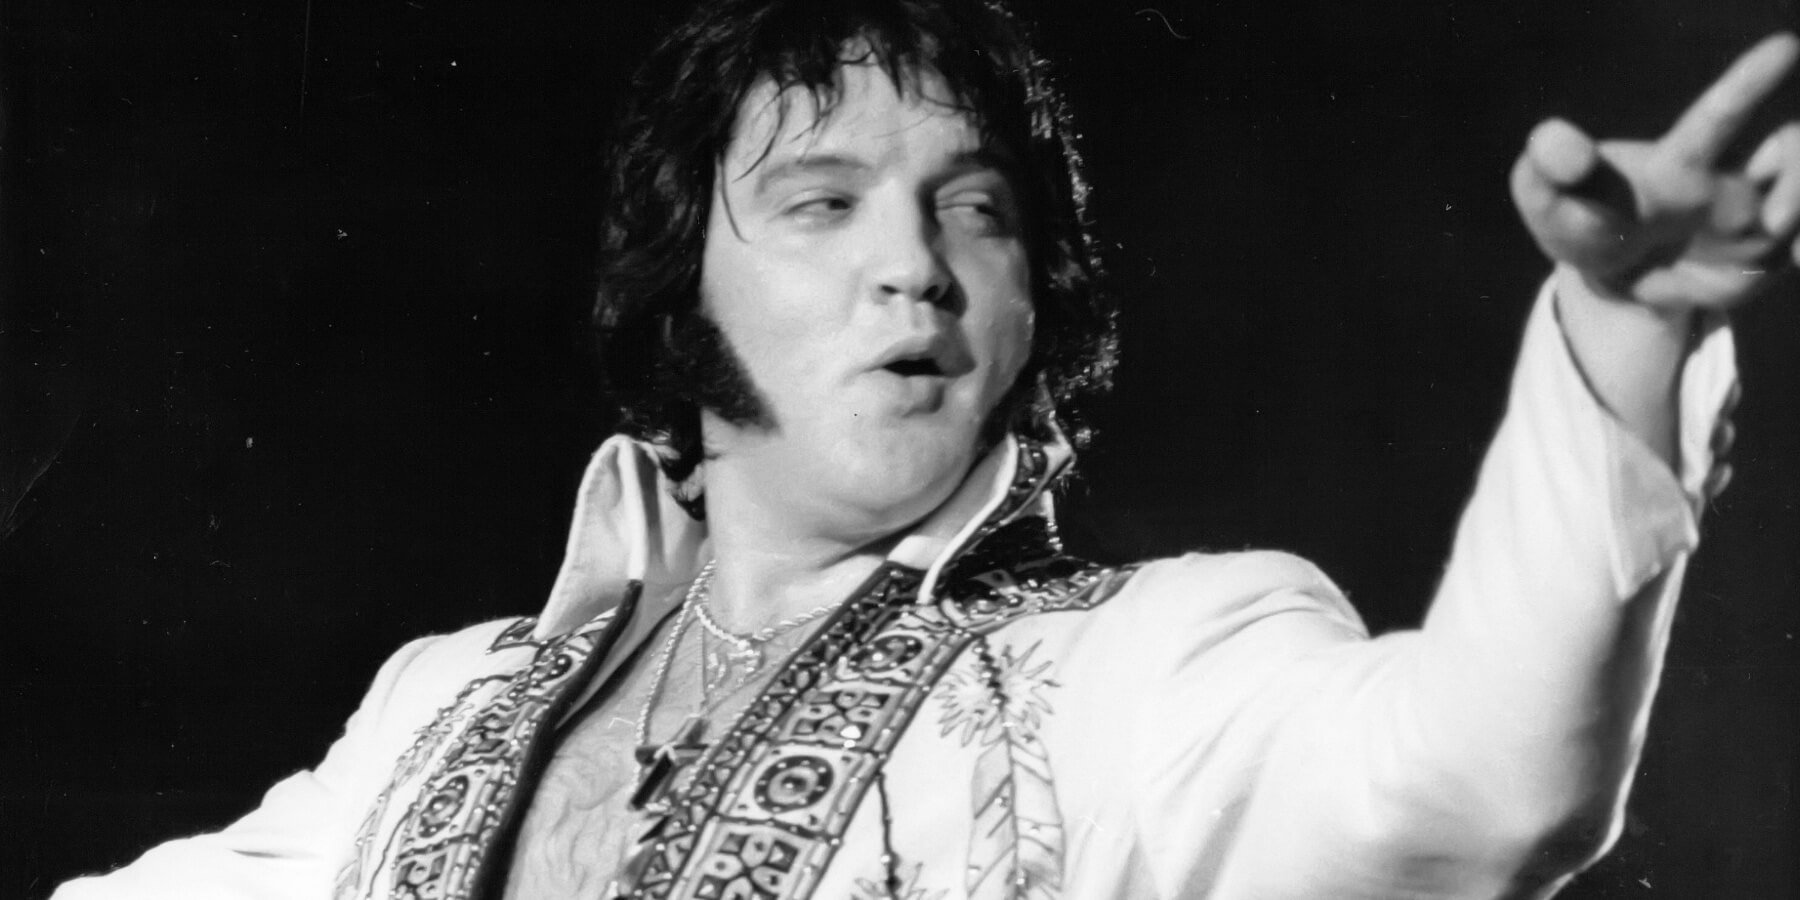 Elvis Presley performs in concert in 1977.